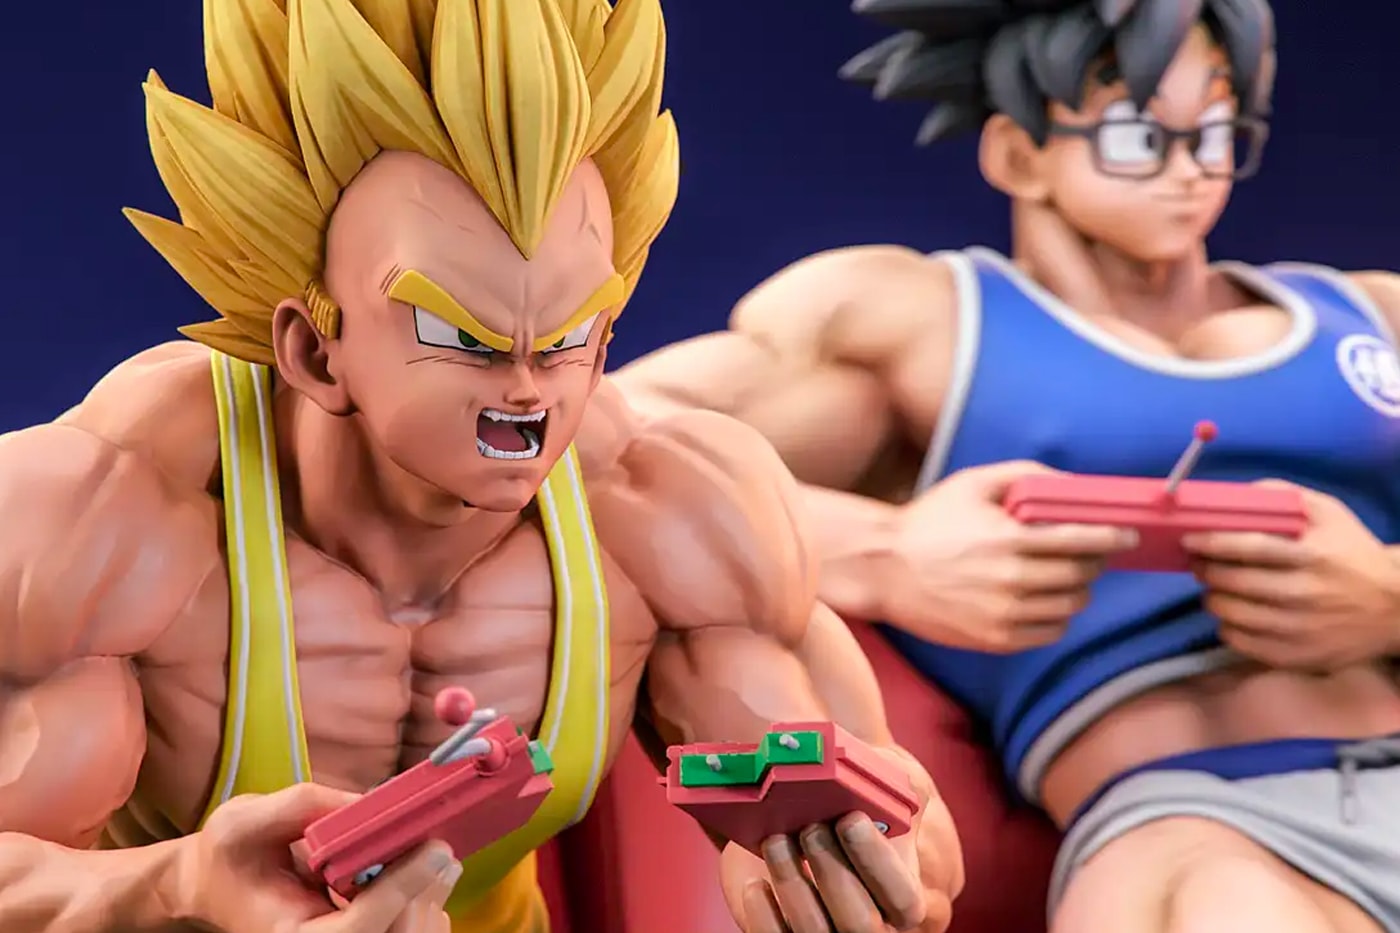 Calcetines Goku y Vegeta ✨ Dragon Ball Z